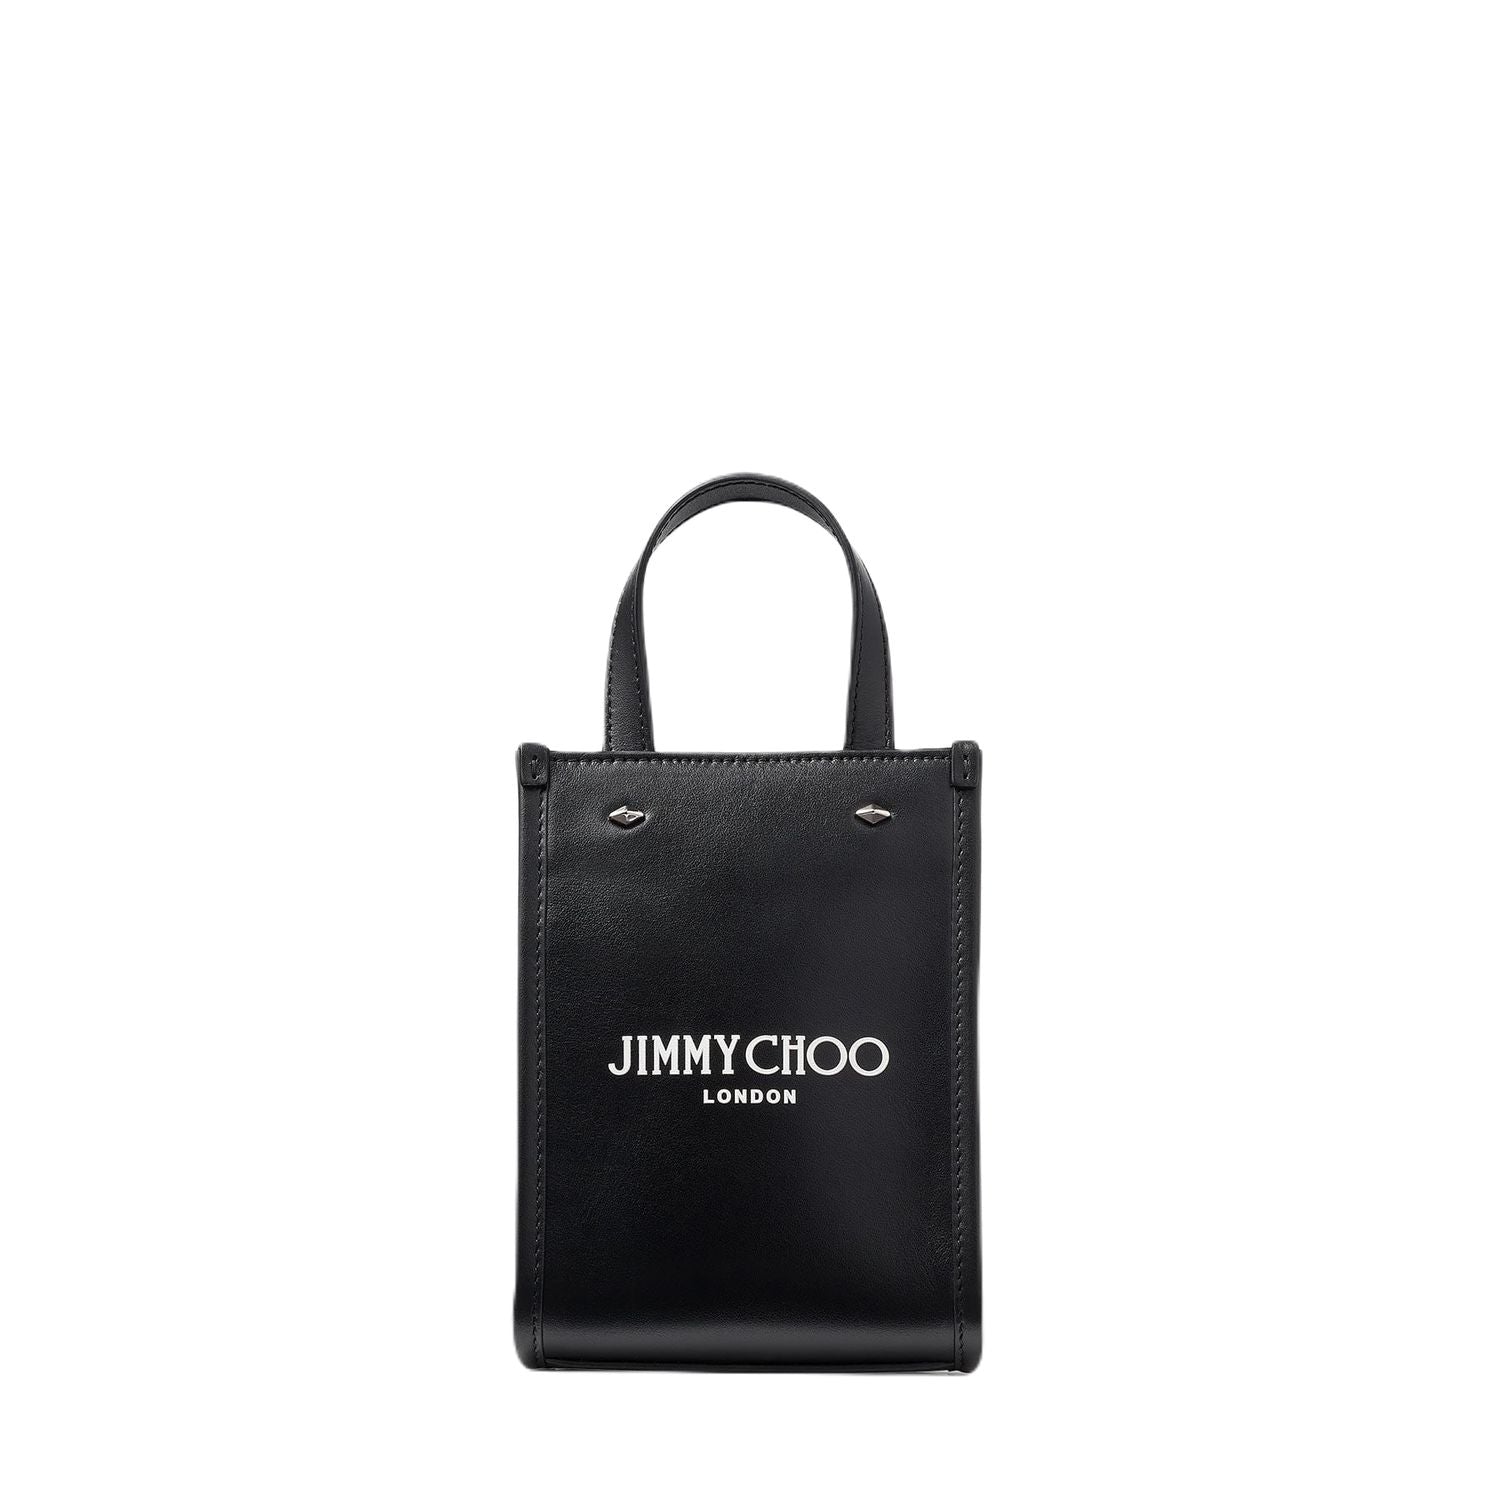 Shop Jimmy Choo Black Leather Mini Tote Handbag For Women